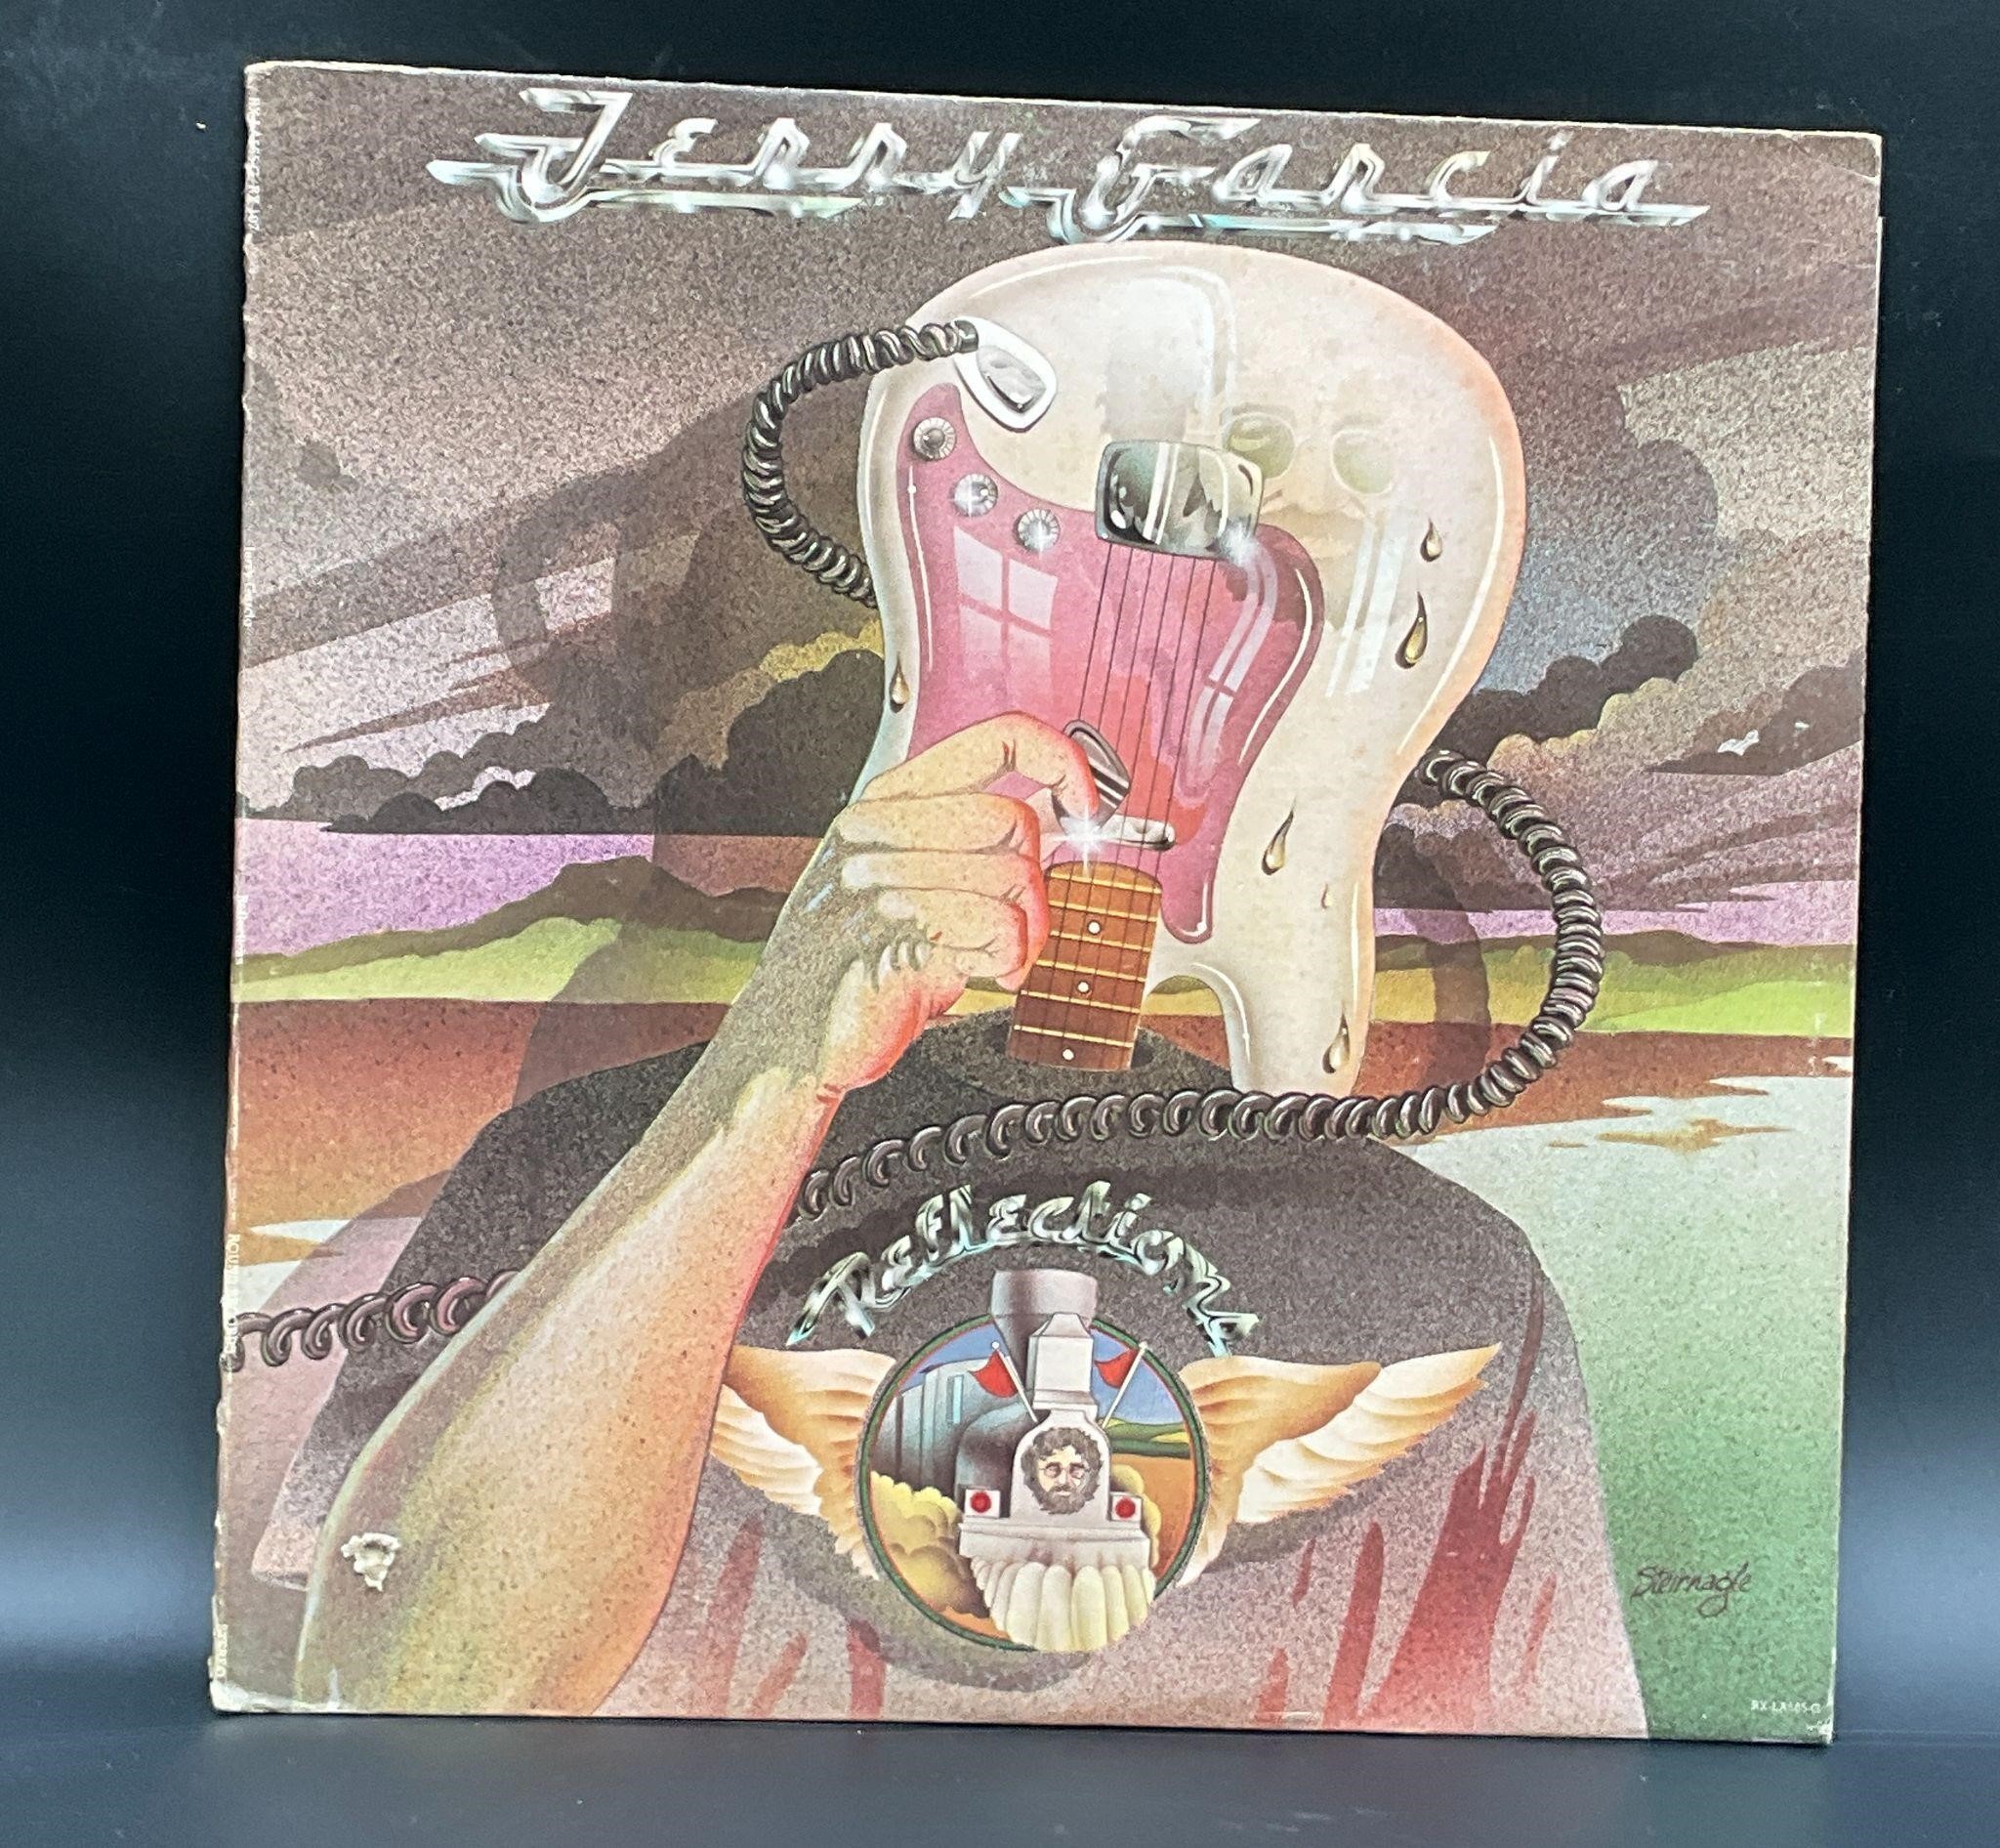 1973 Jerry Garcia "Reflections" Classic Rock LP